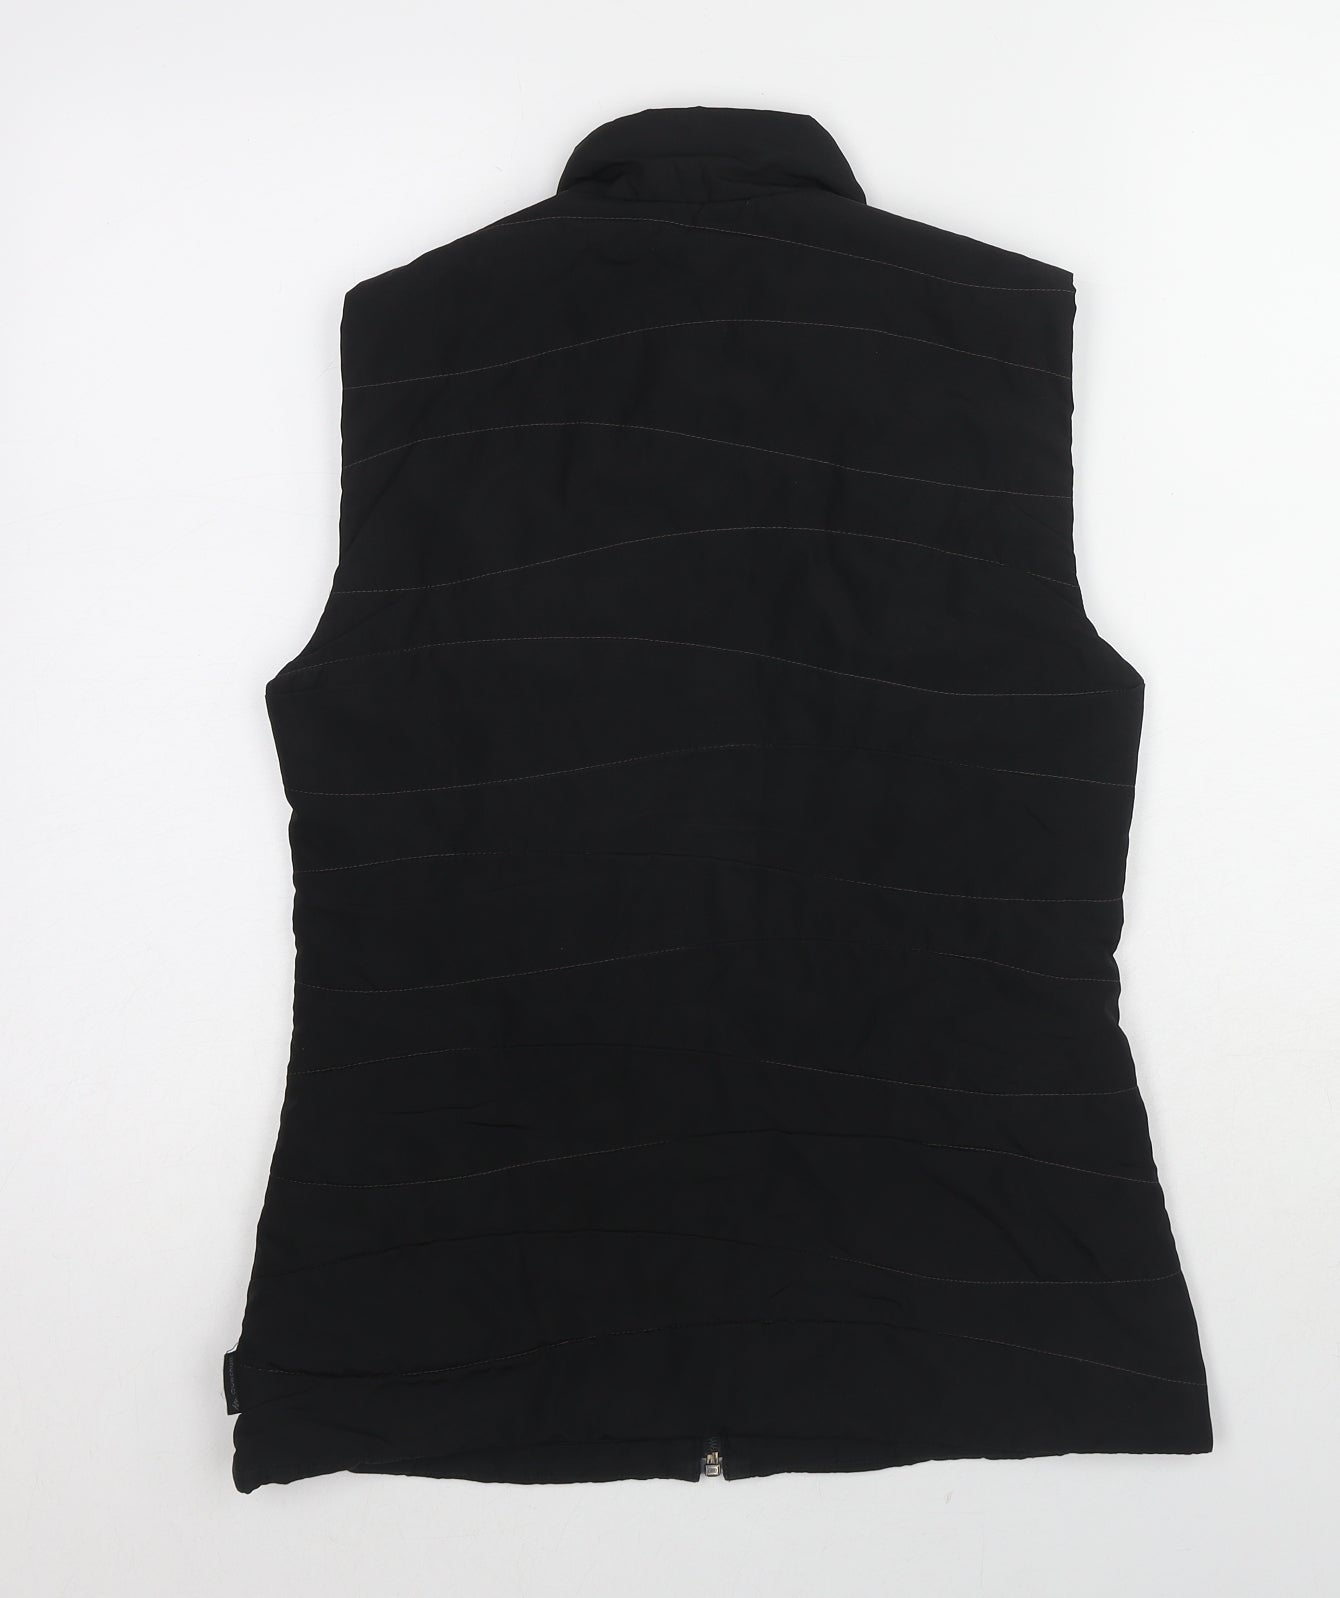 DECATHLON Womens Black Gilet Jacket Size S Zip